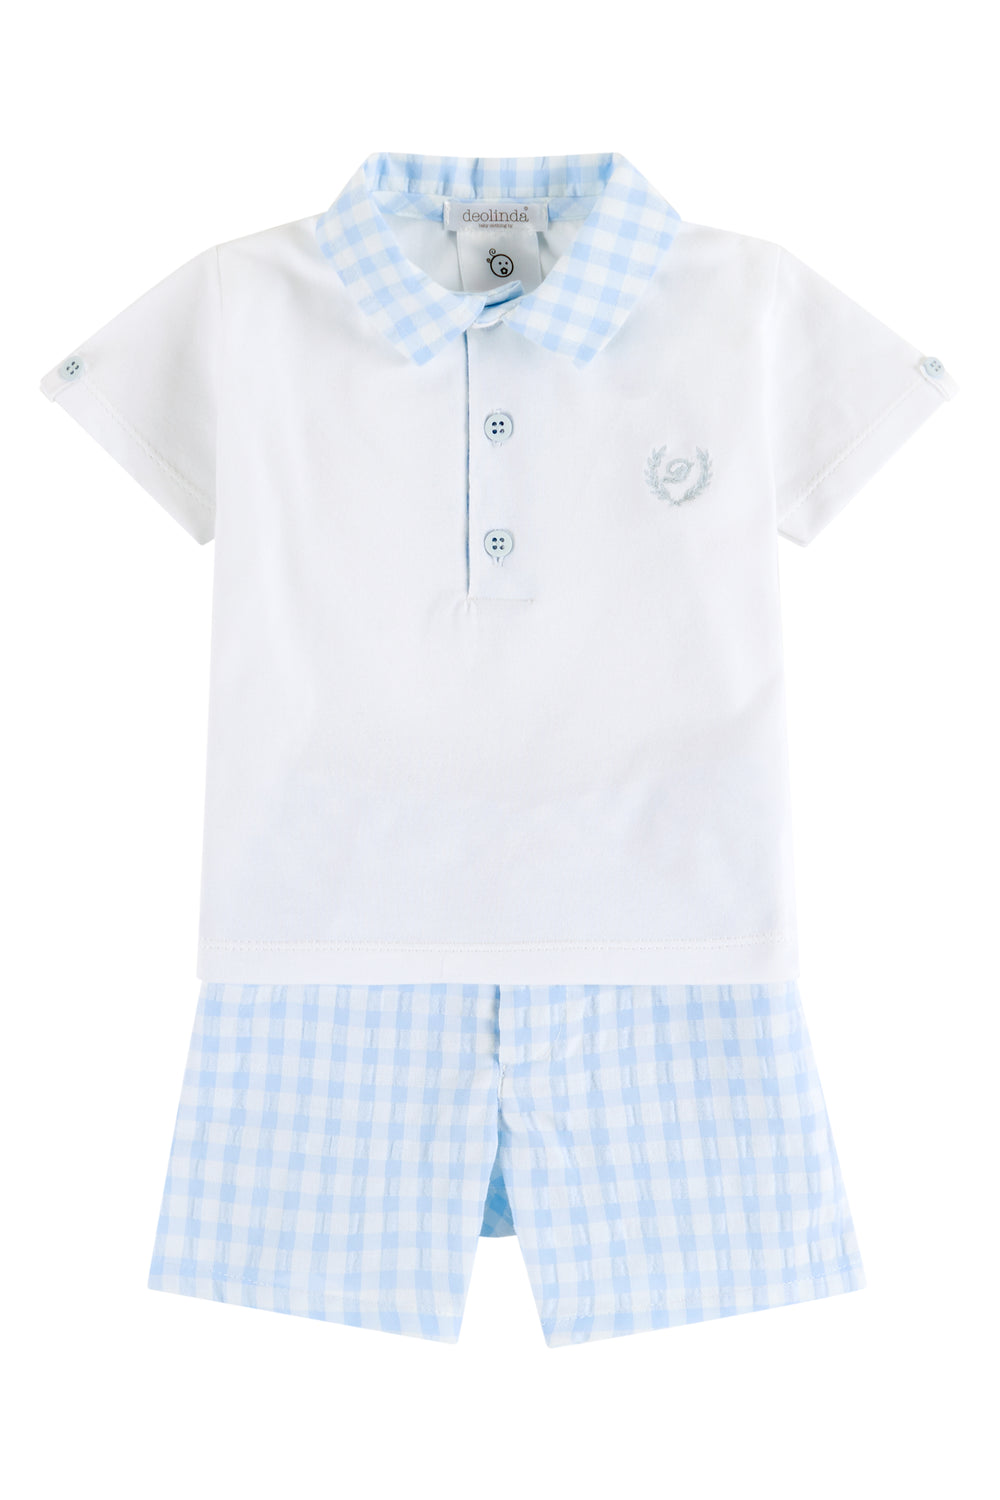 Deolinda "Hudson" Blue Gingham Polo Shirt & Shorts | Millie and John